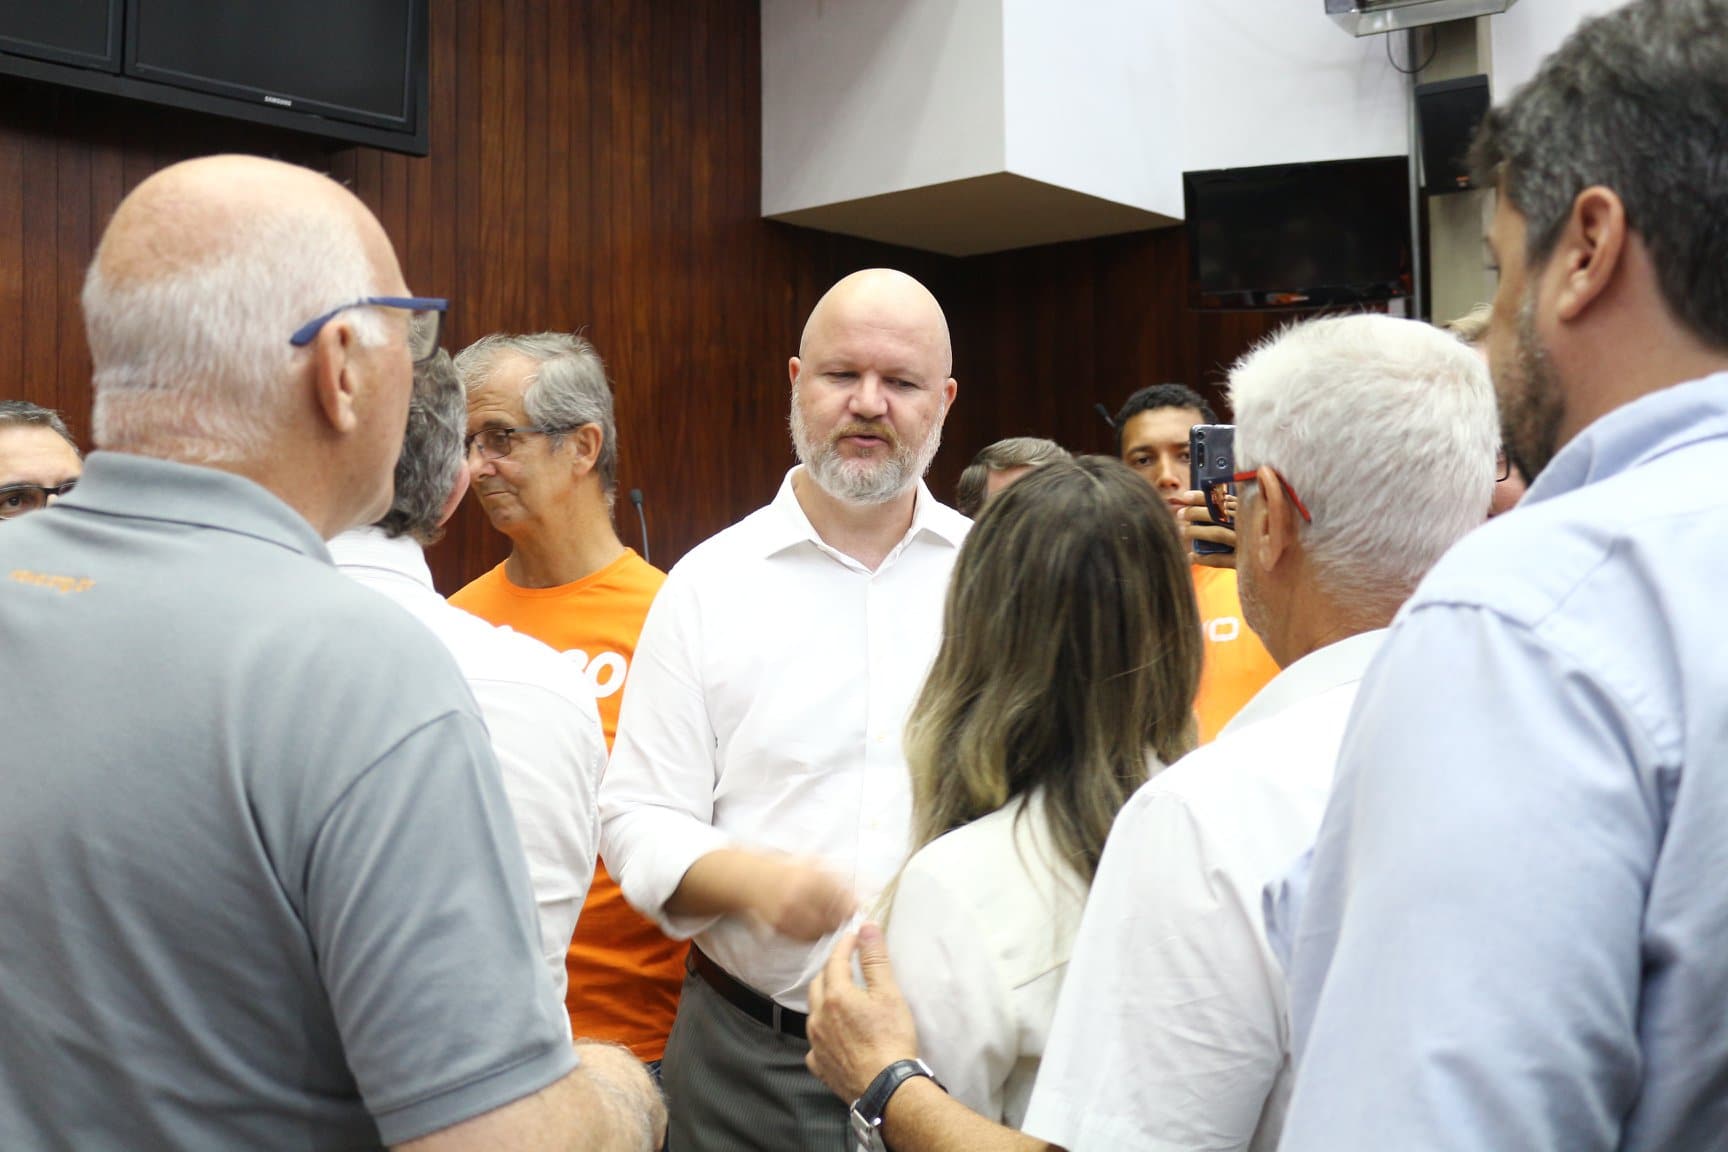  Novo confirma Edney candidato a prefeito, com Rogério Souza para vice